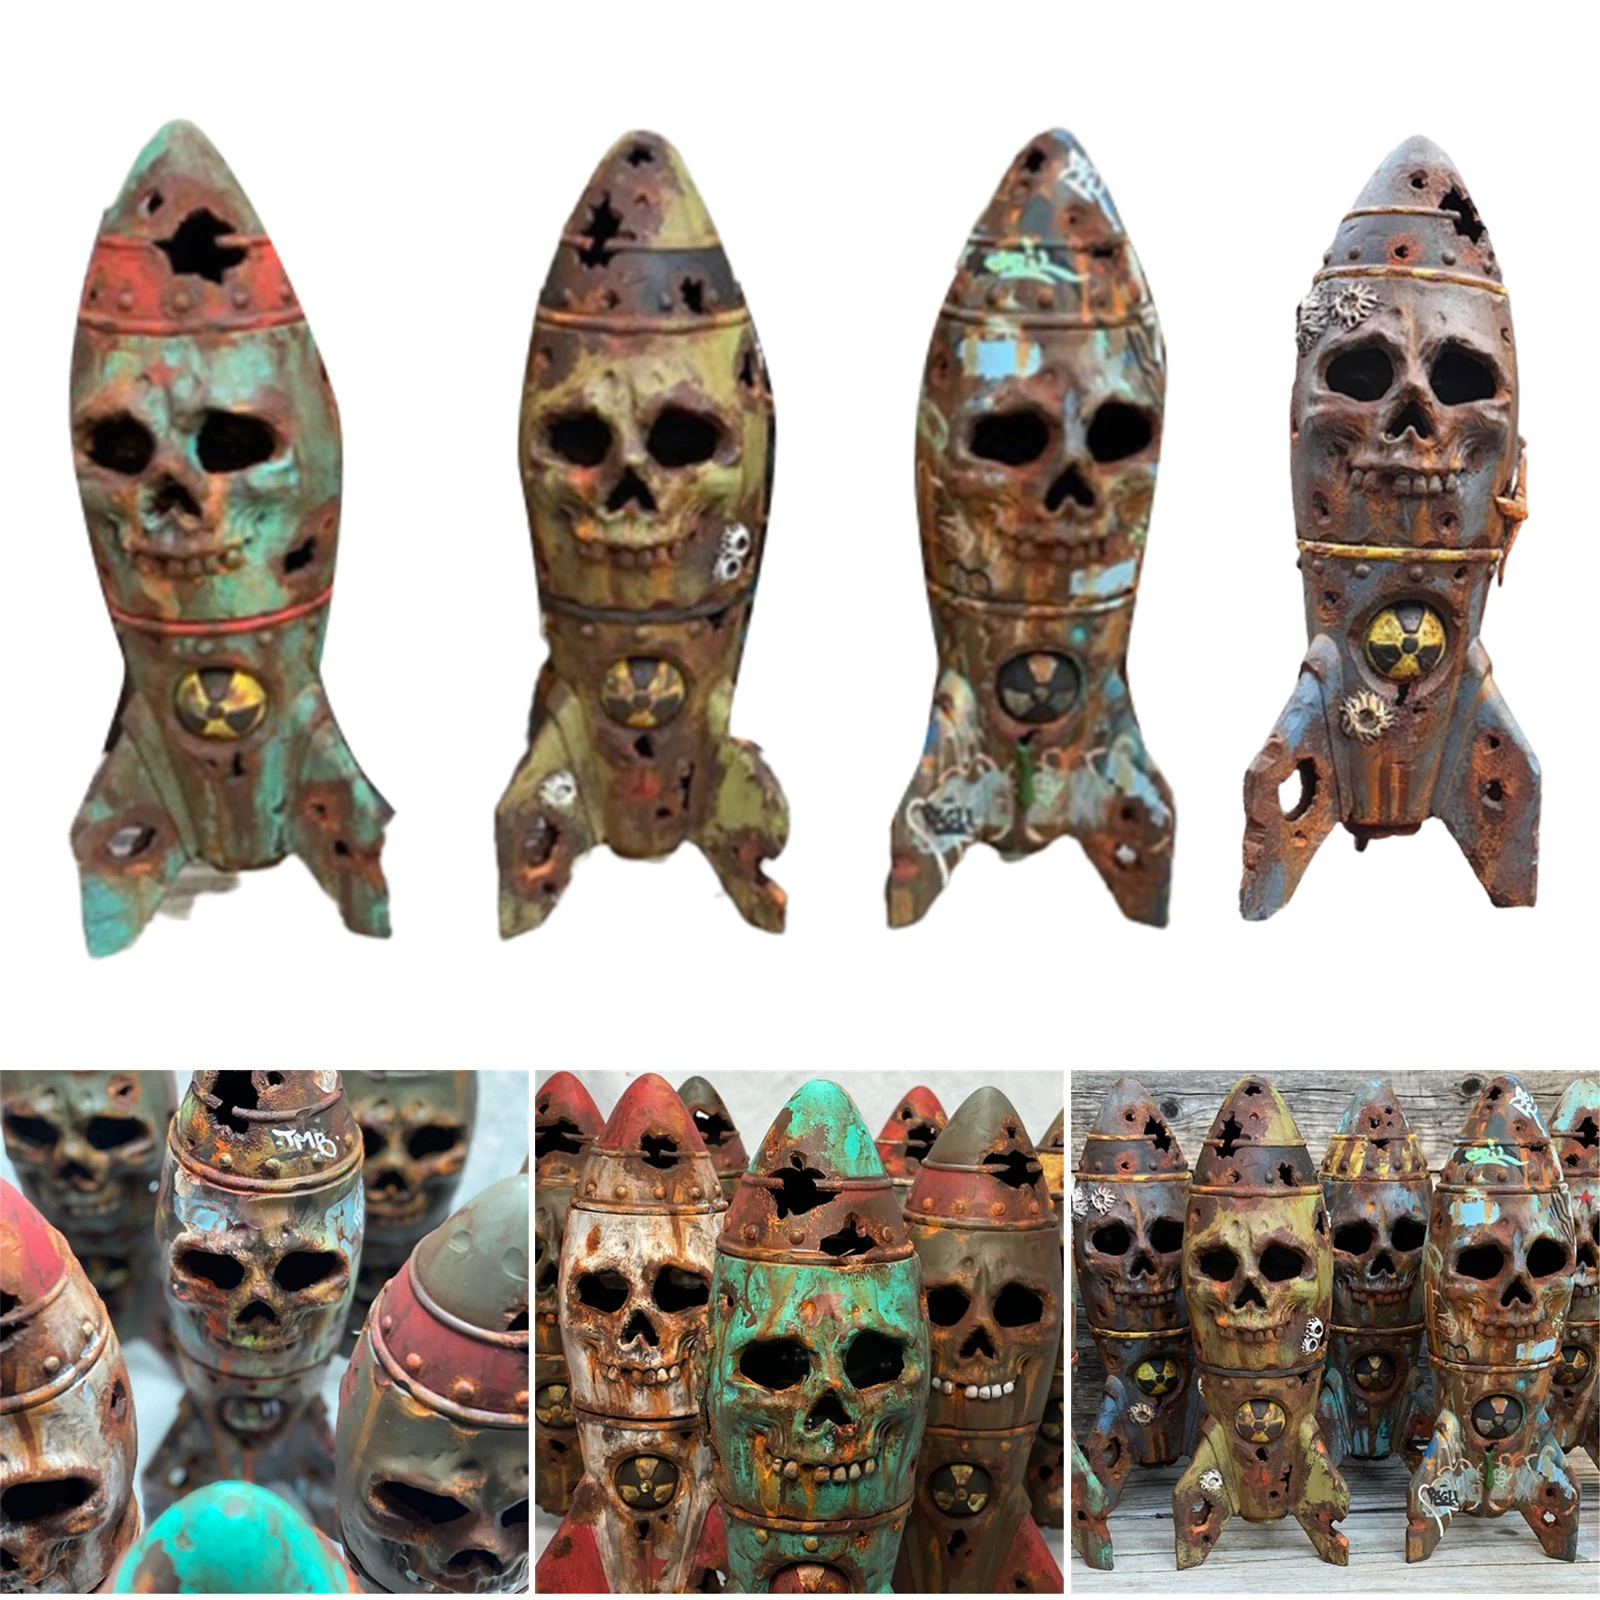 Newly The Skull Bomb Resin Ornament Small Nuclear Warhead Decor for Yard Garden Home Desktop Halloween Decoration